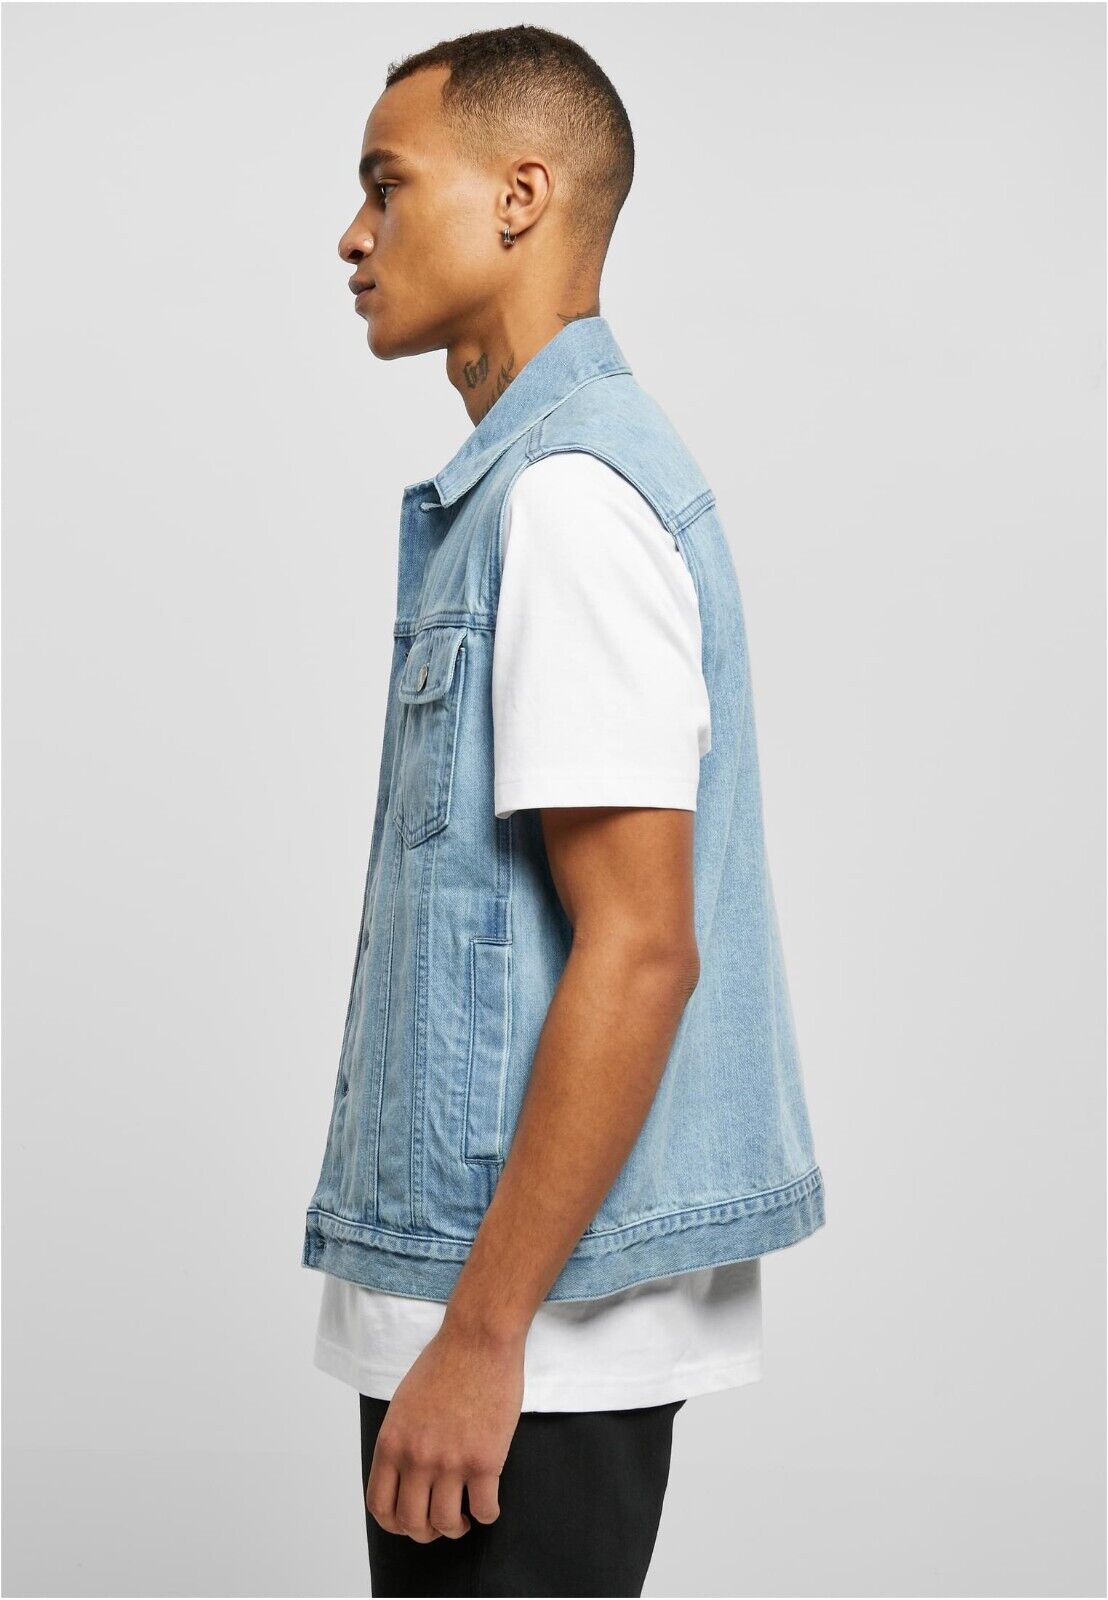 Urban Classics Vest Jacket Men's Jeans Denim Vest Size 3XL | eBay